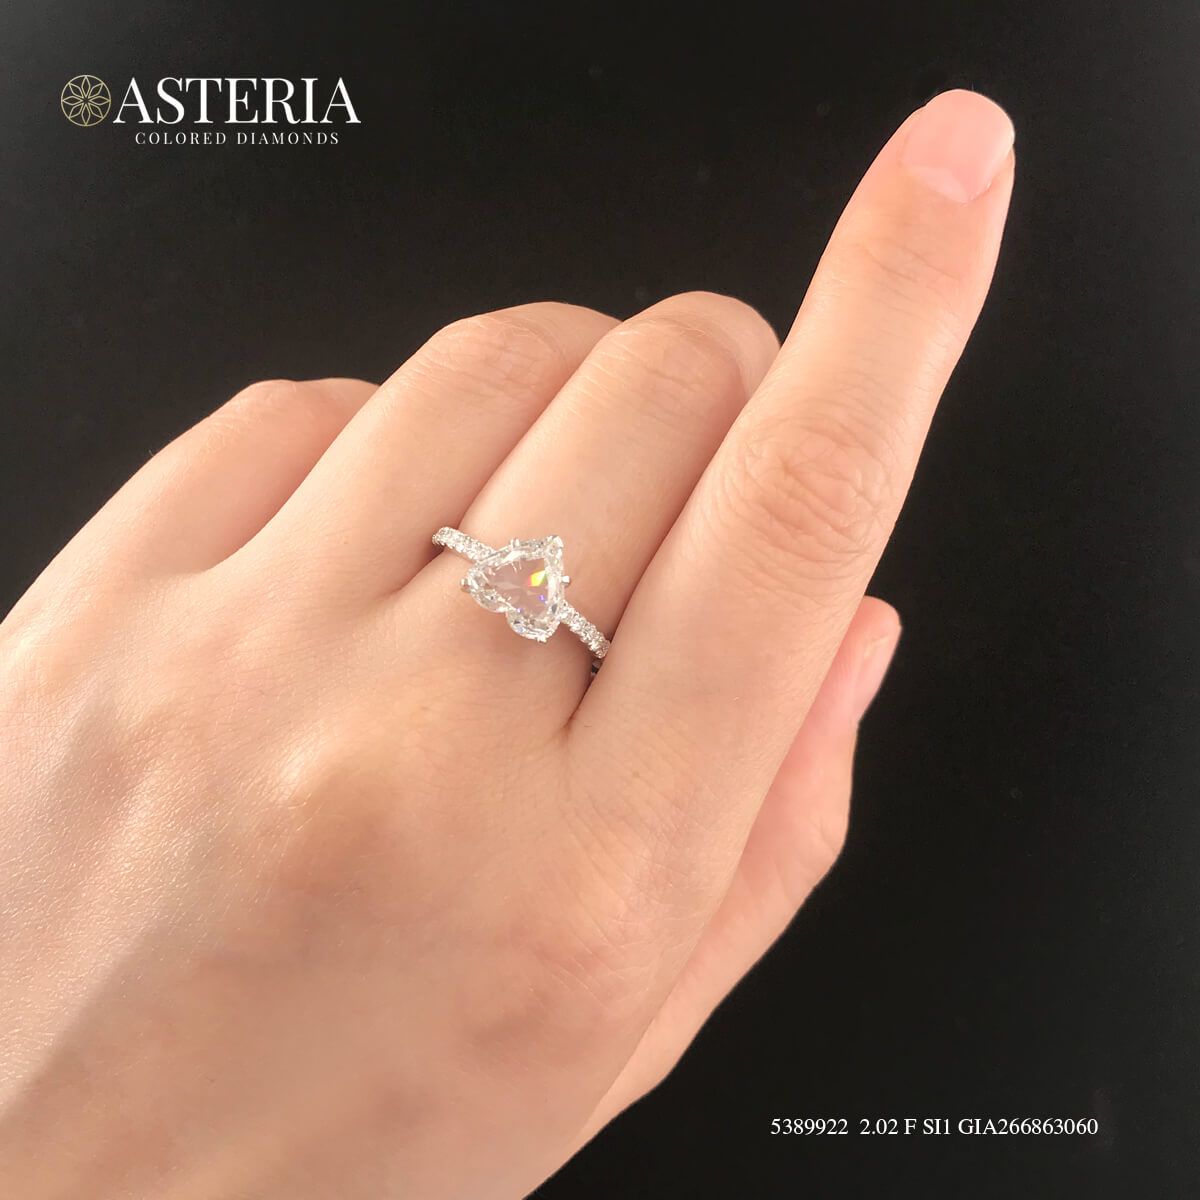 White Diamond Ring, 1.24 Ct. (1.57 Ct. TW), Heart shape, GIA Certified, 2274407974